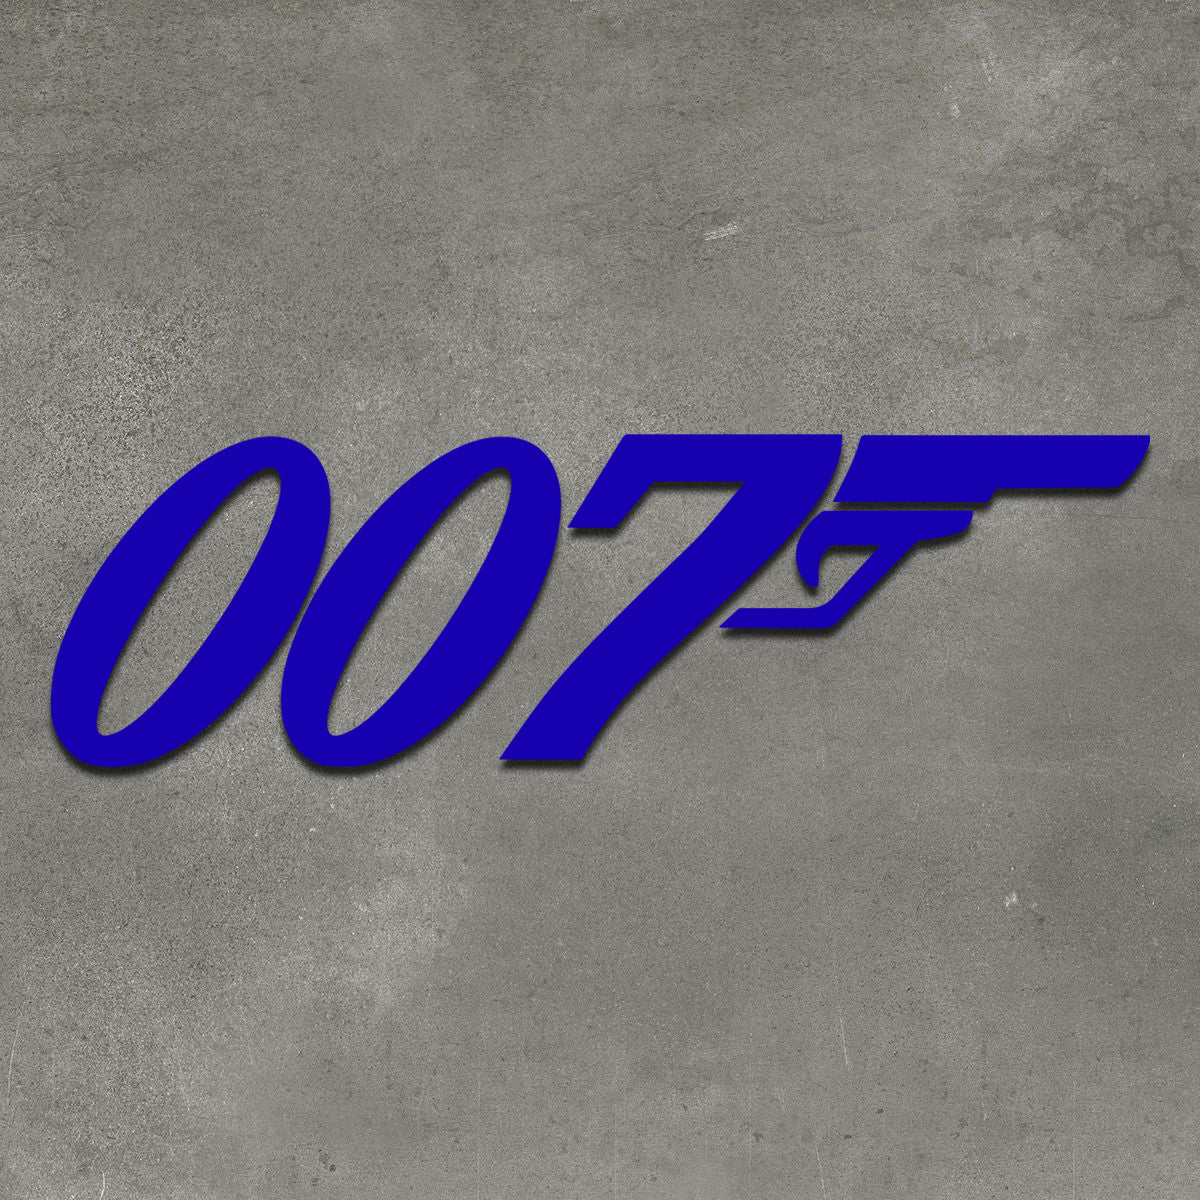 James Bond vector logo download free